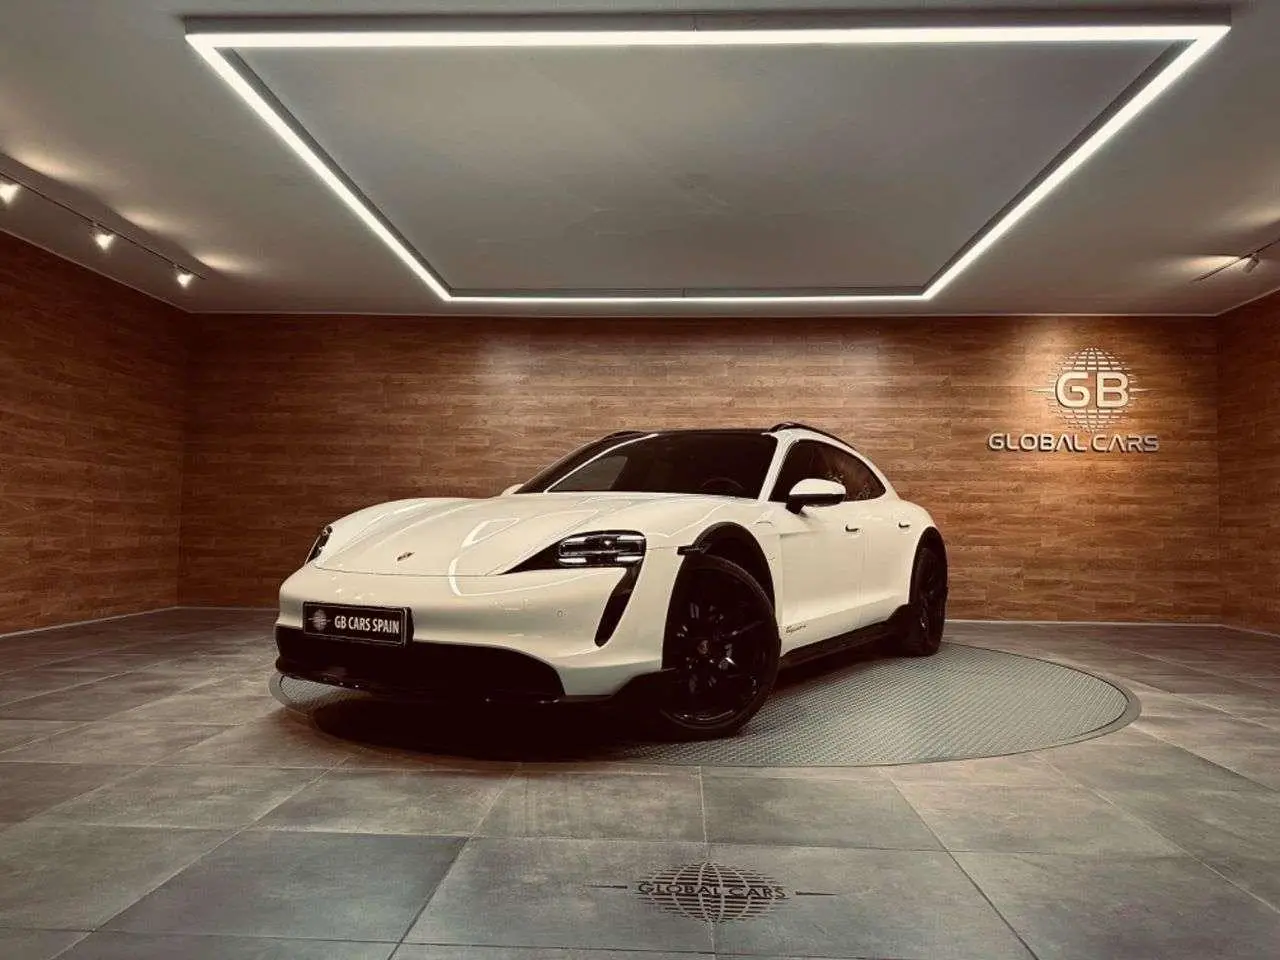 Photo 1 : Porsche Taycan 2021 Electric